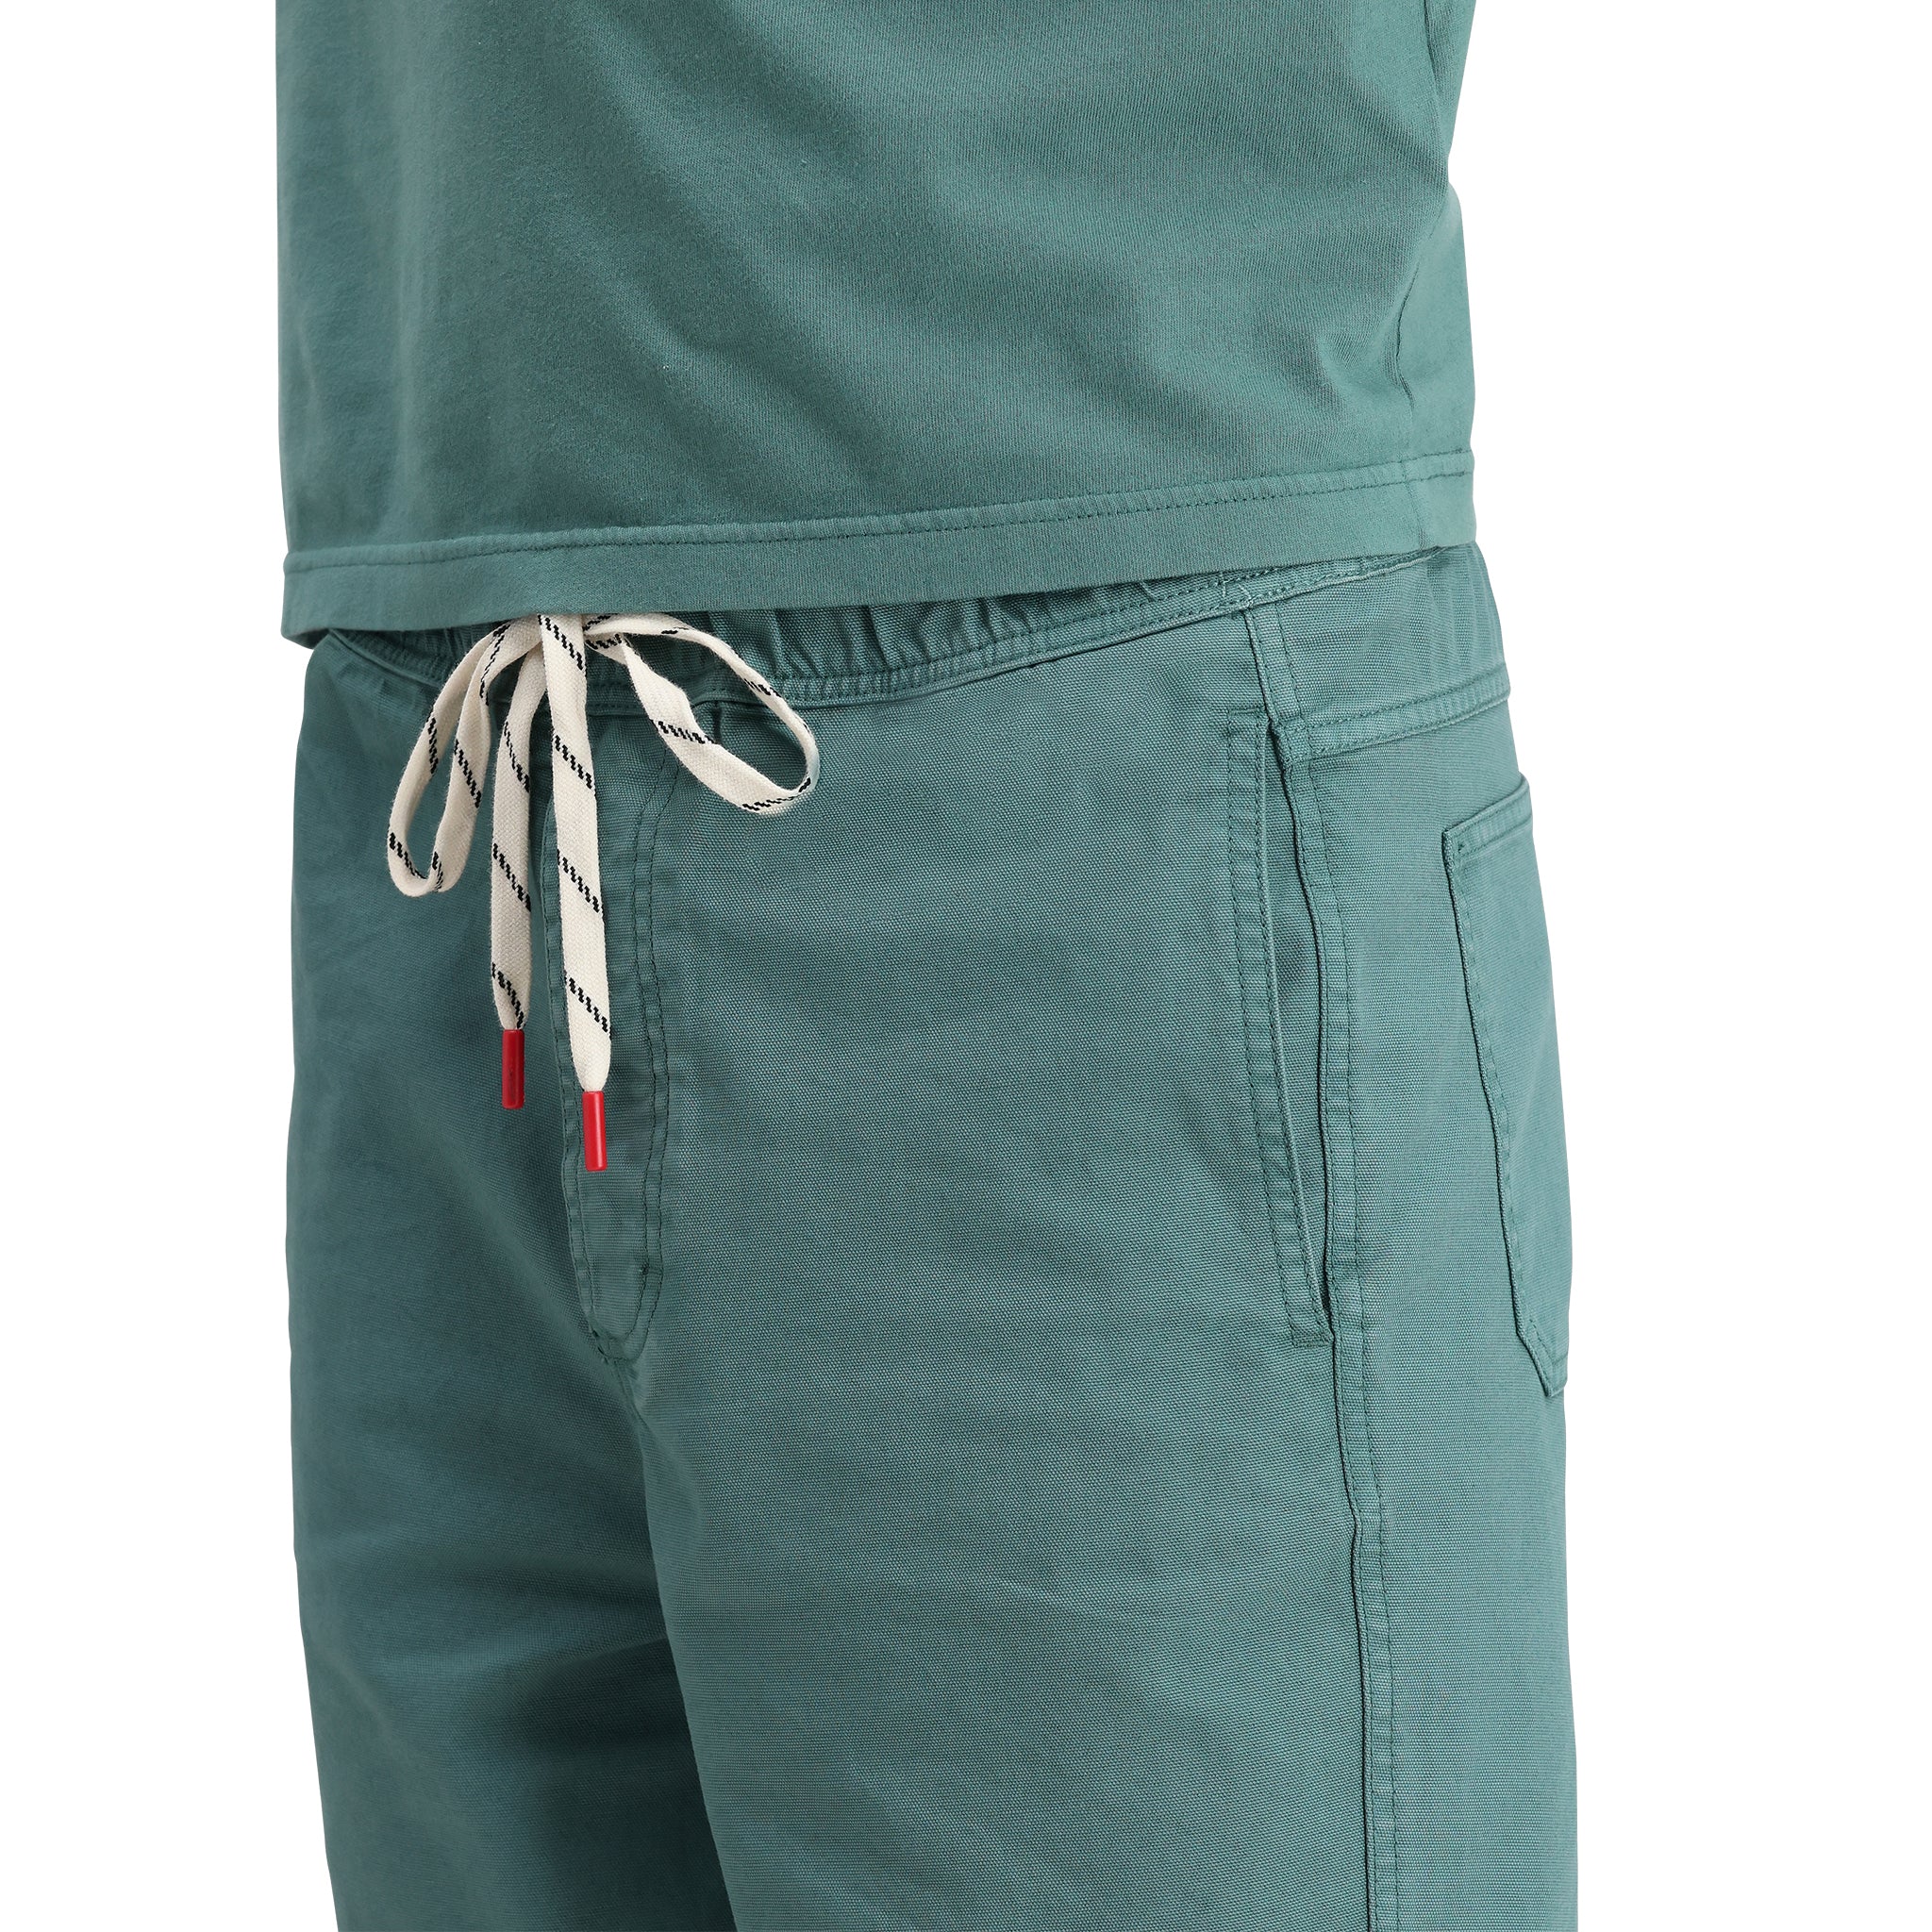 Detail shot of Topo Designs Dirt Shorts - Men's in "Sea Pine"